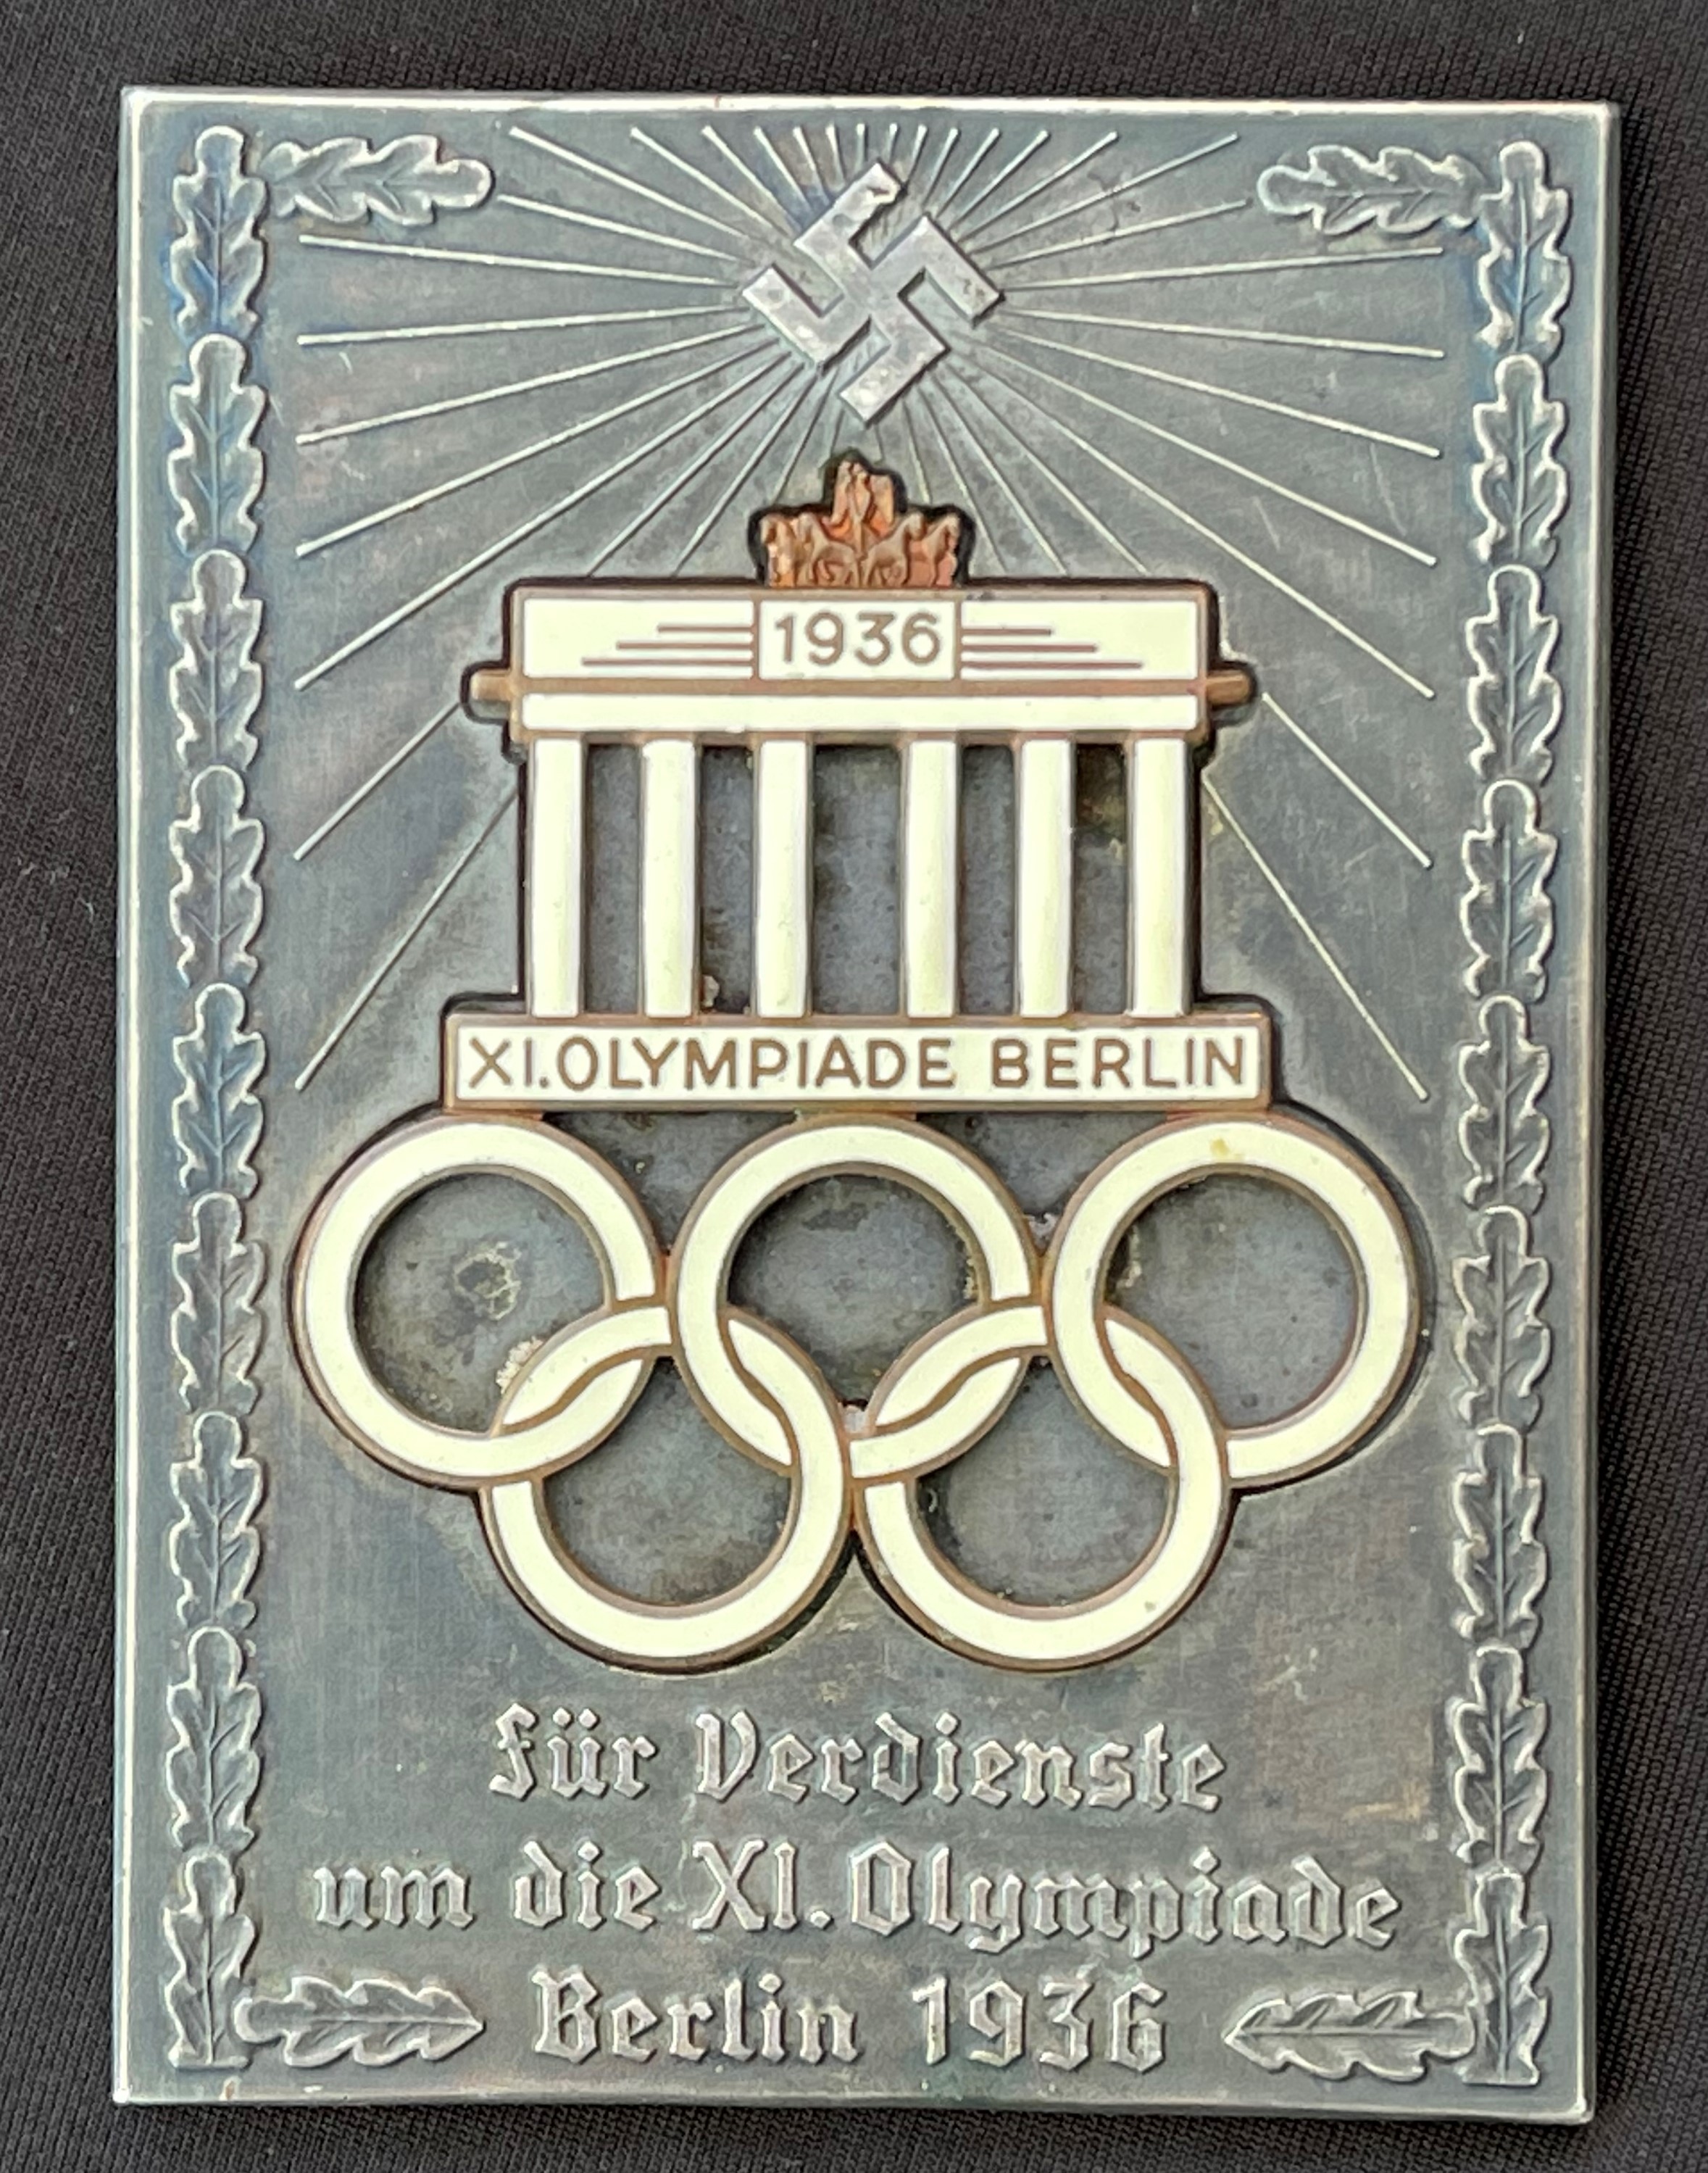 WW2 Third Reich 1936 XI Olympiade Berlin non portable award. Inscribed "Fur Verdienste um die XI